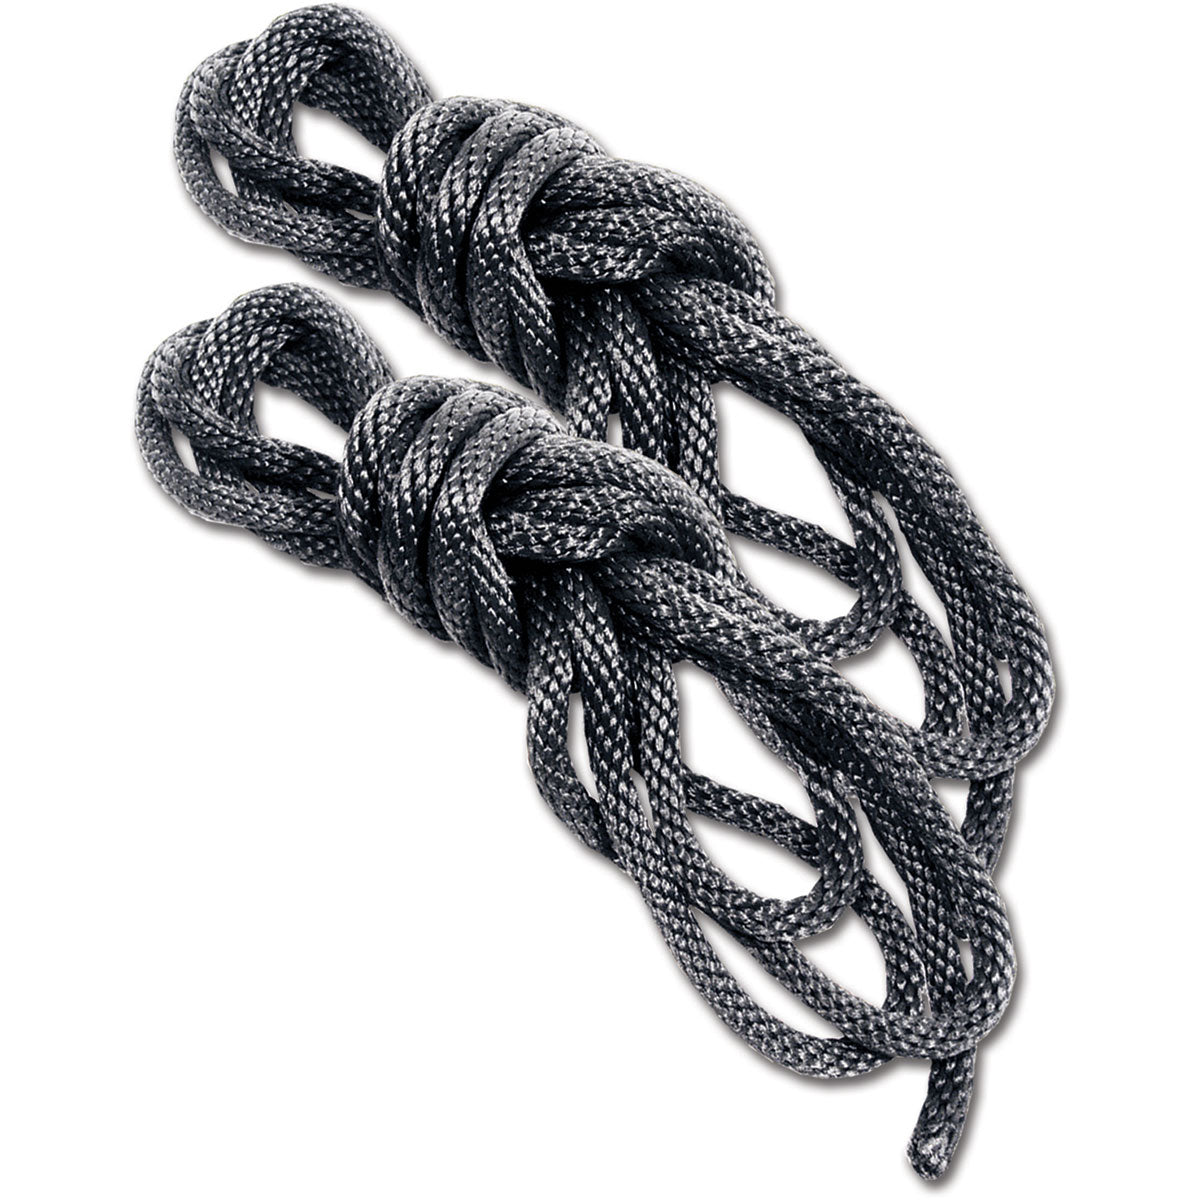 Silky Rope Kit Black